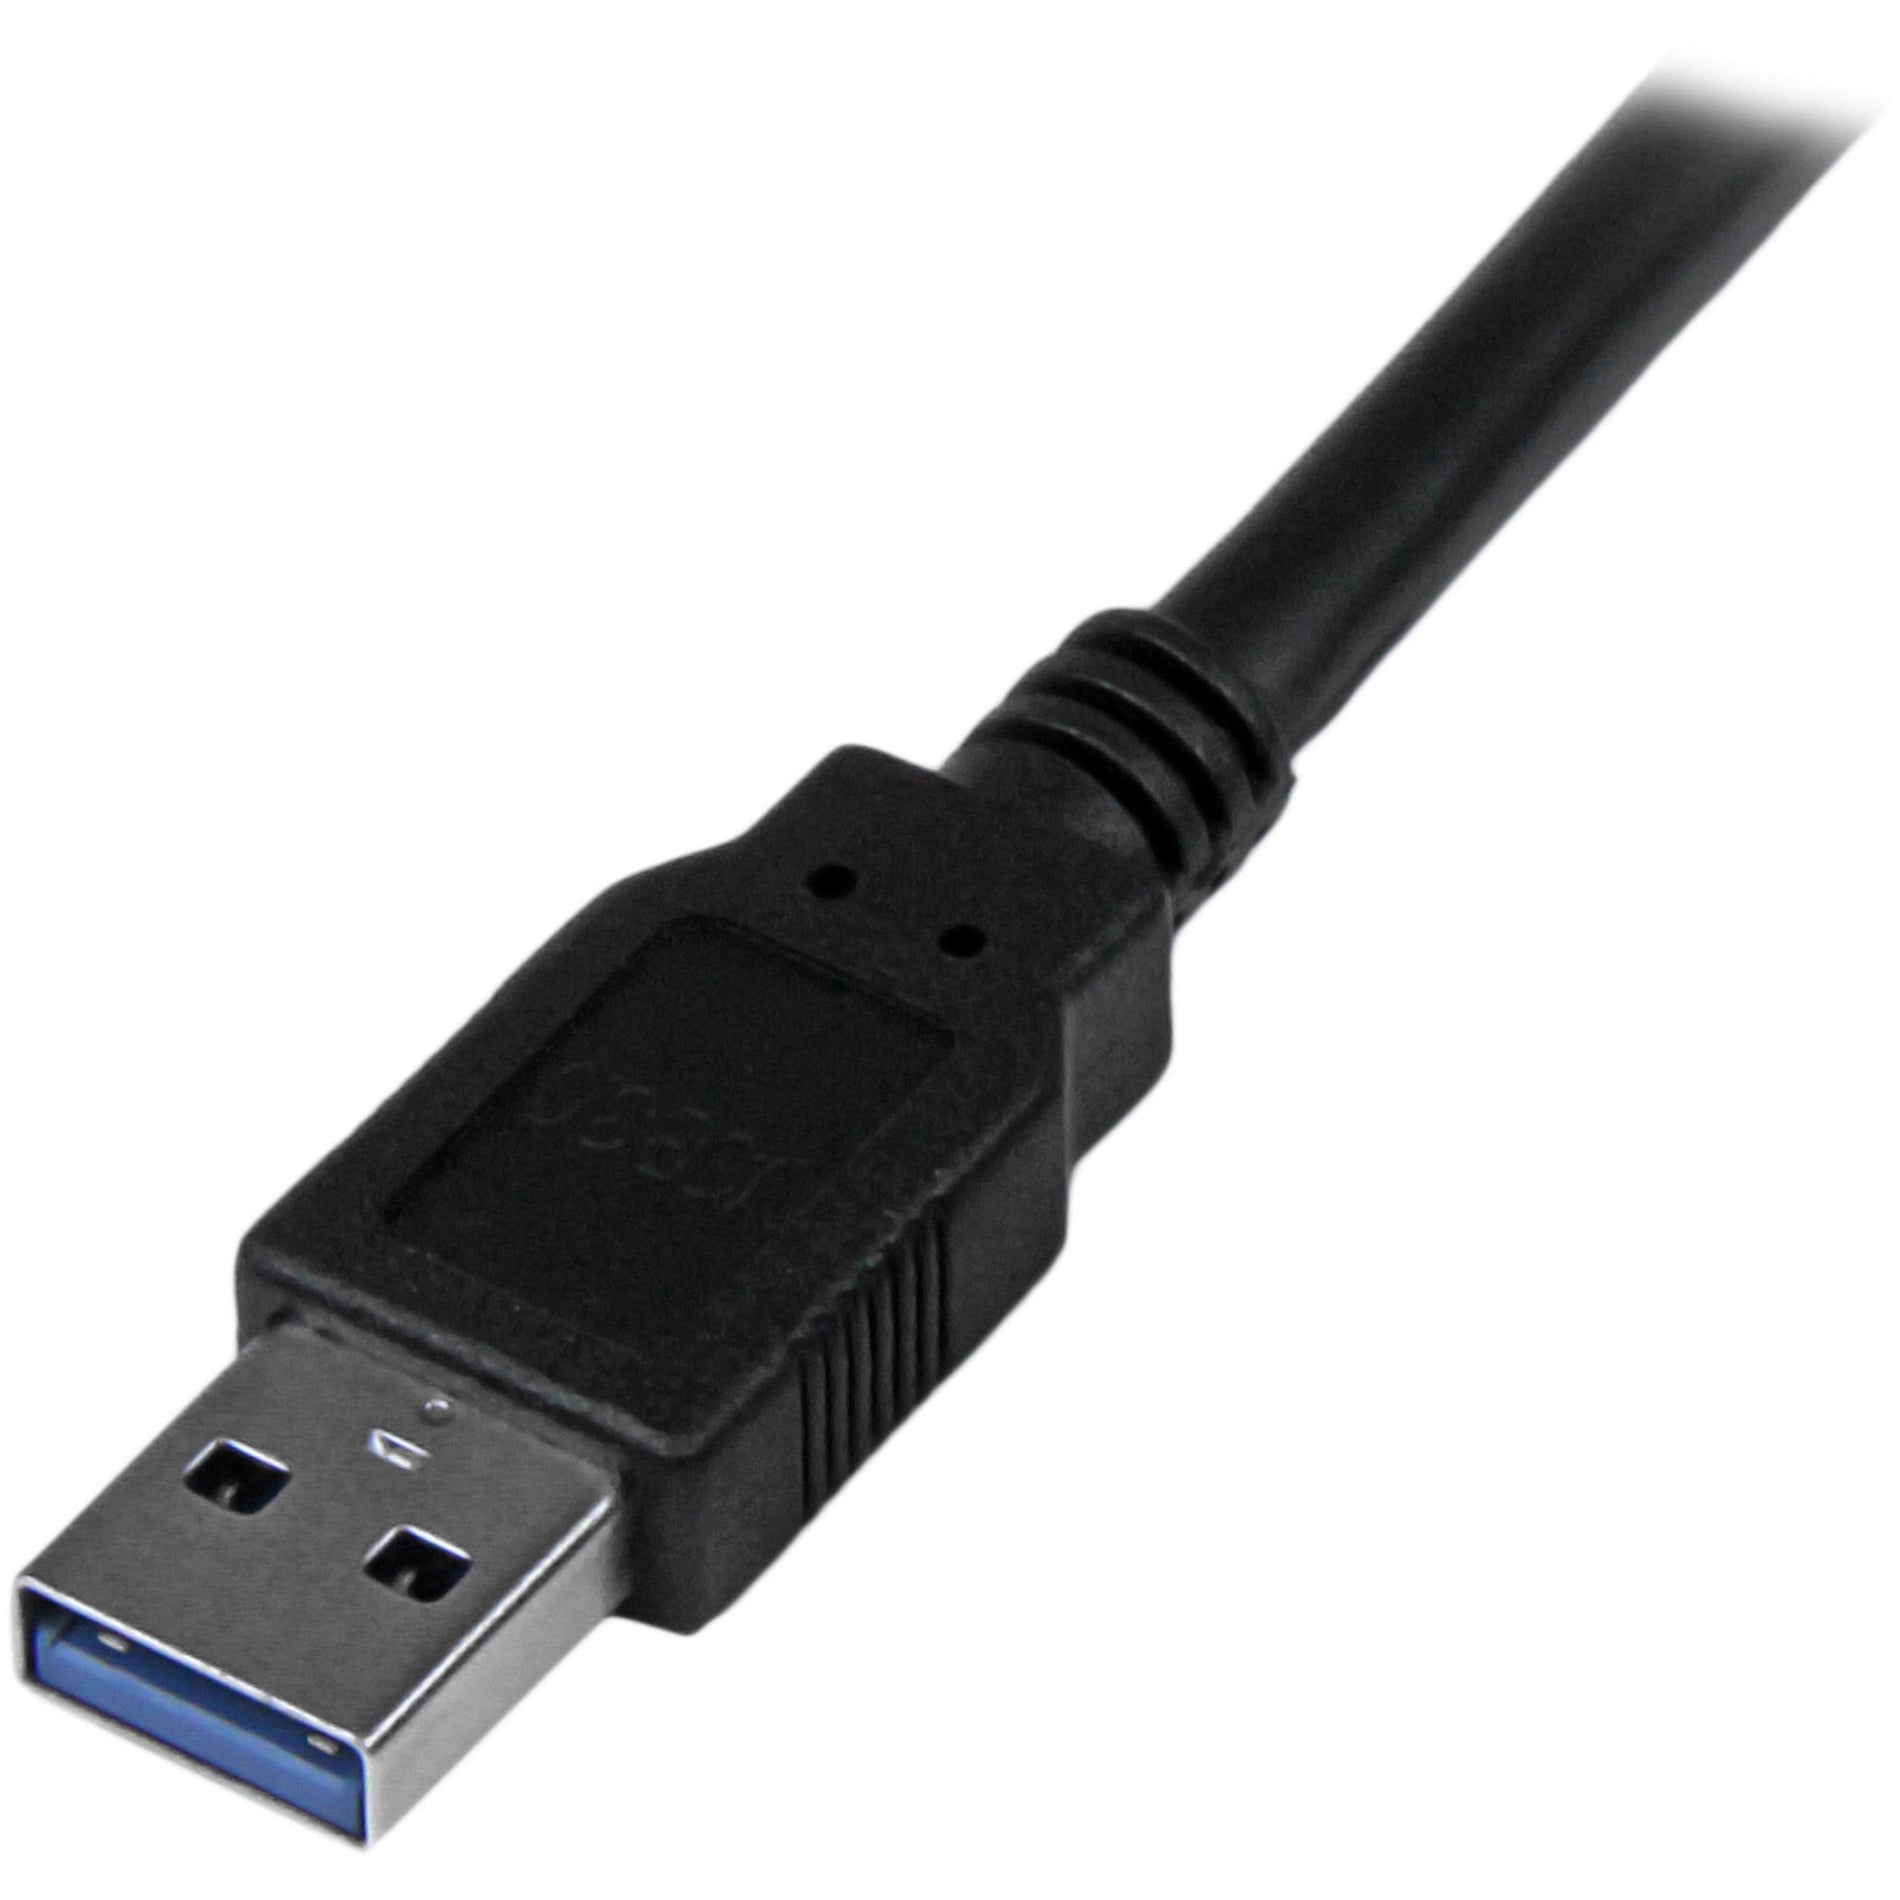 StarTech.com كبل USB3SAA6BK 6 قدم أسود كابل USB 3.0 من النوع A إلى A - ذكر إلى ذكر ، نقل البيانات بسرعة عالية ، الحماية من التداخل الكهرومغناطيسي ، ضمان مدى الحياة